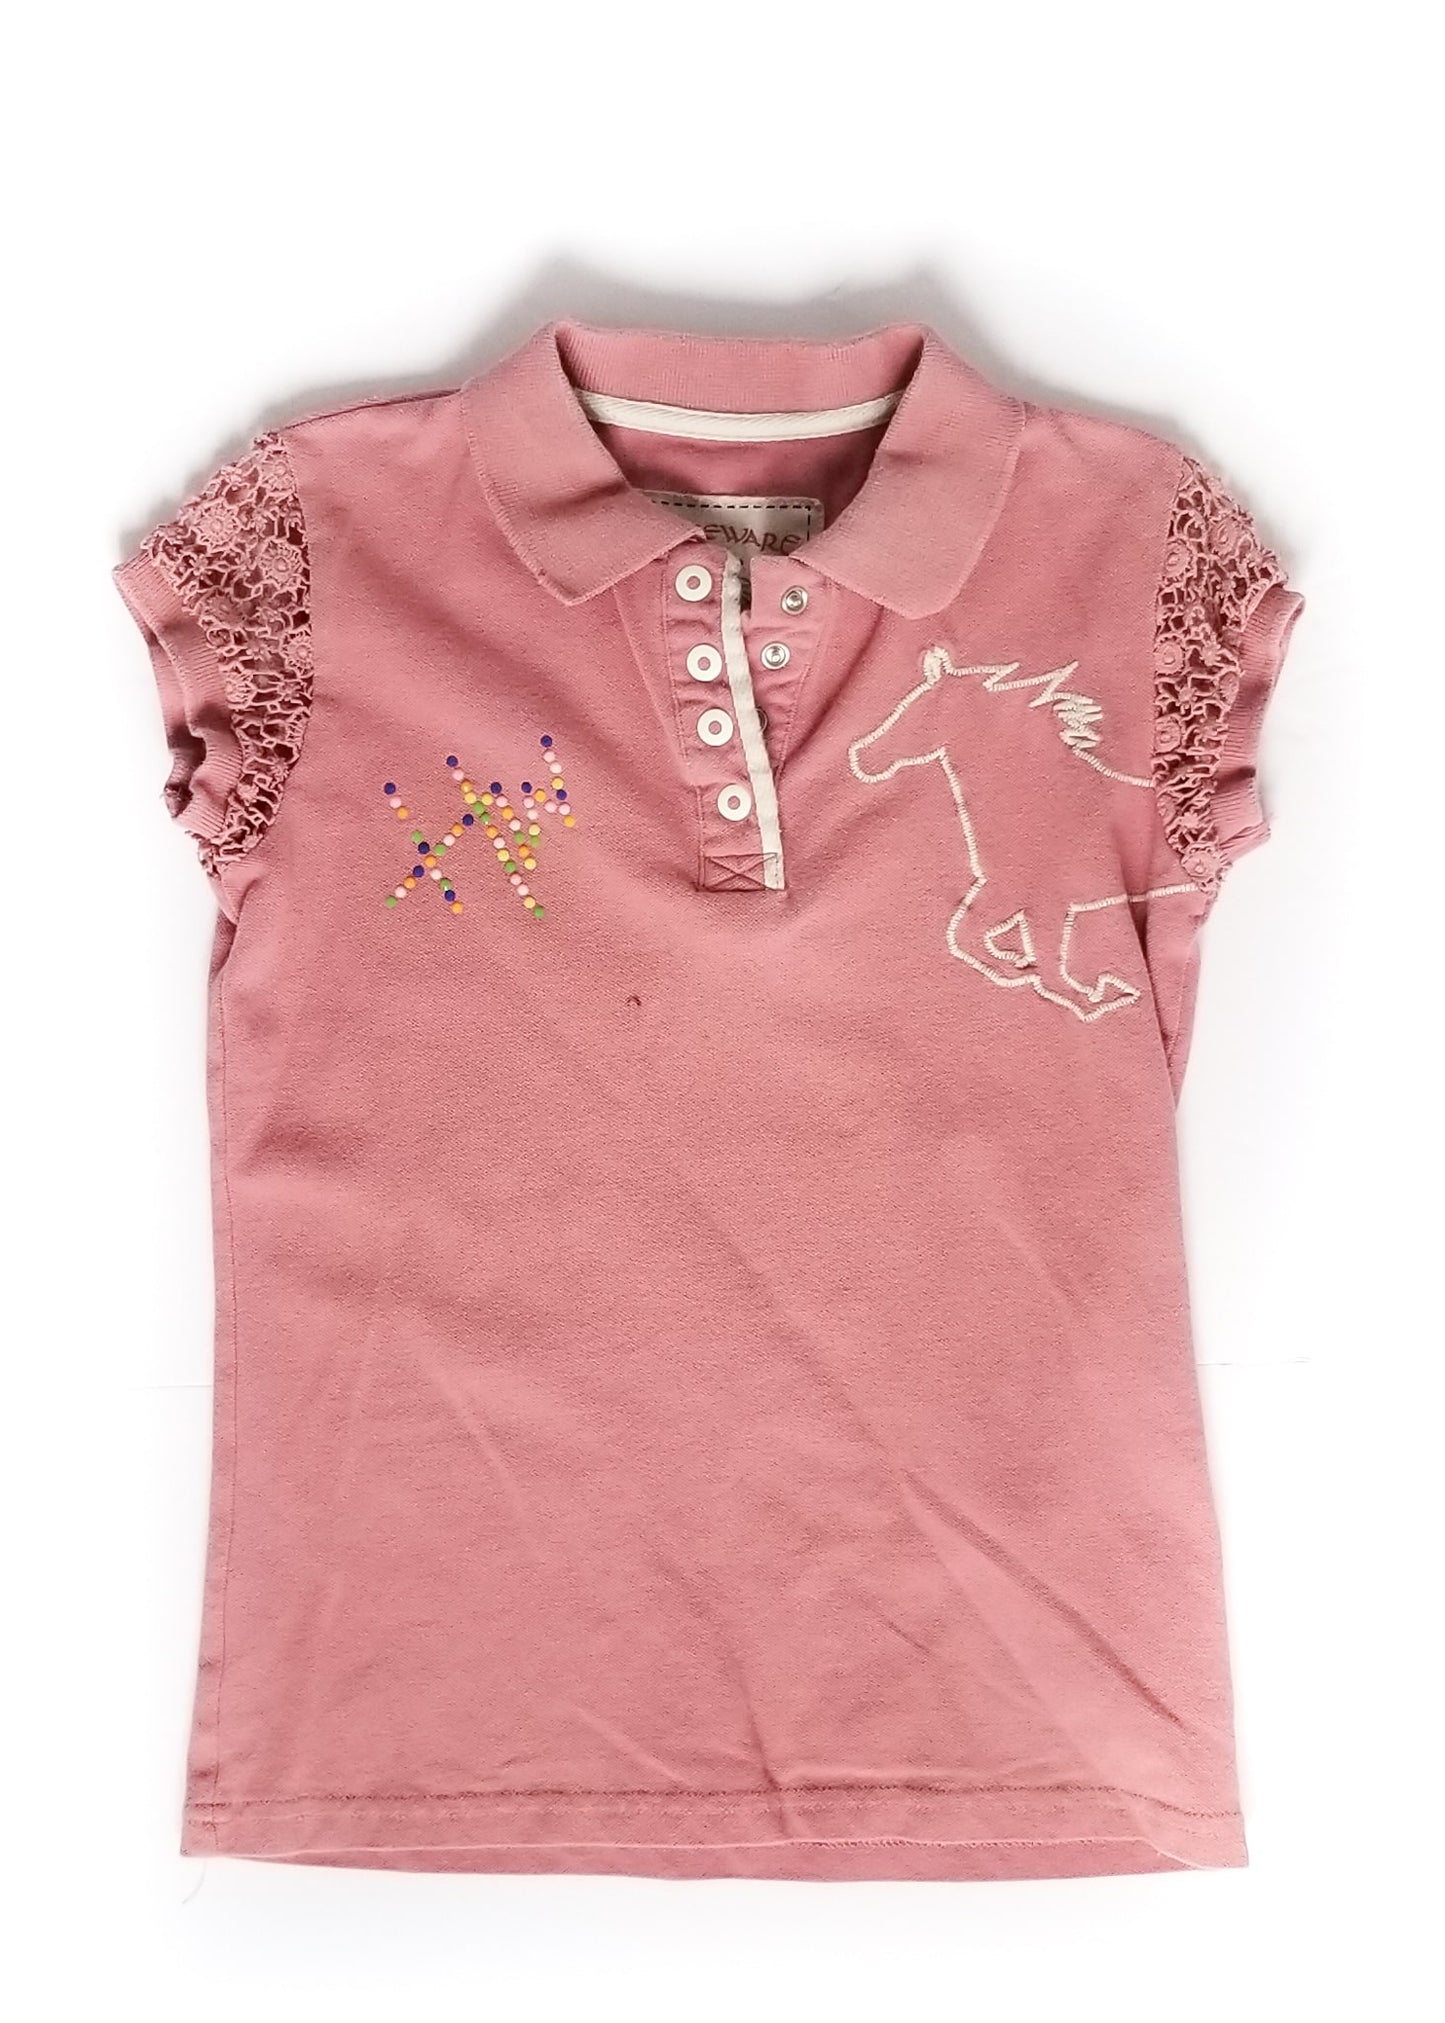 Horseware Ireland Polo Shirt - Pink - Youth 7/8